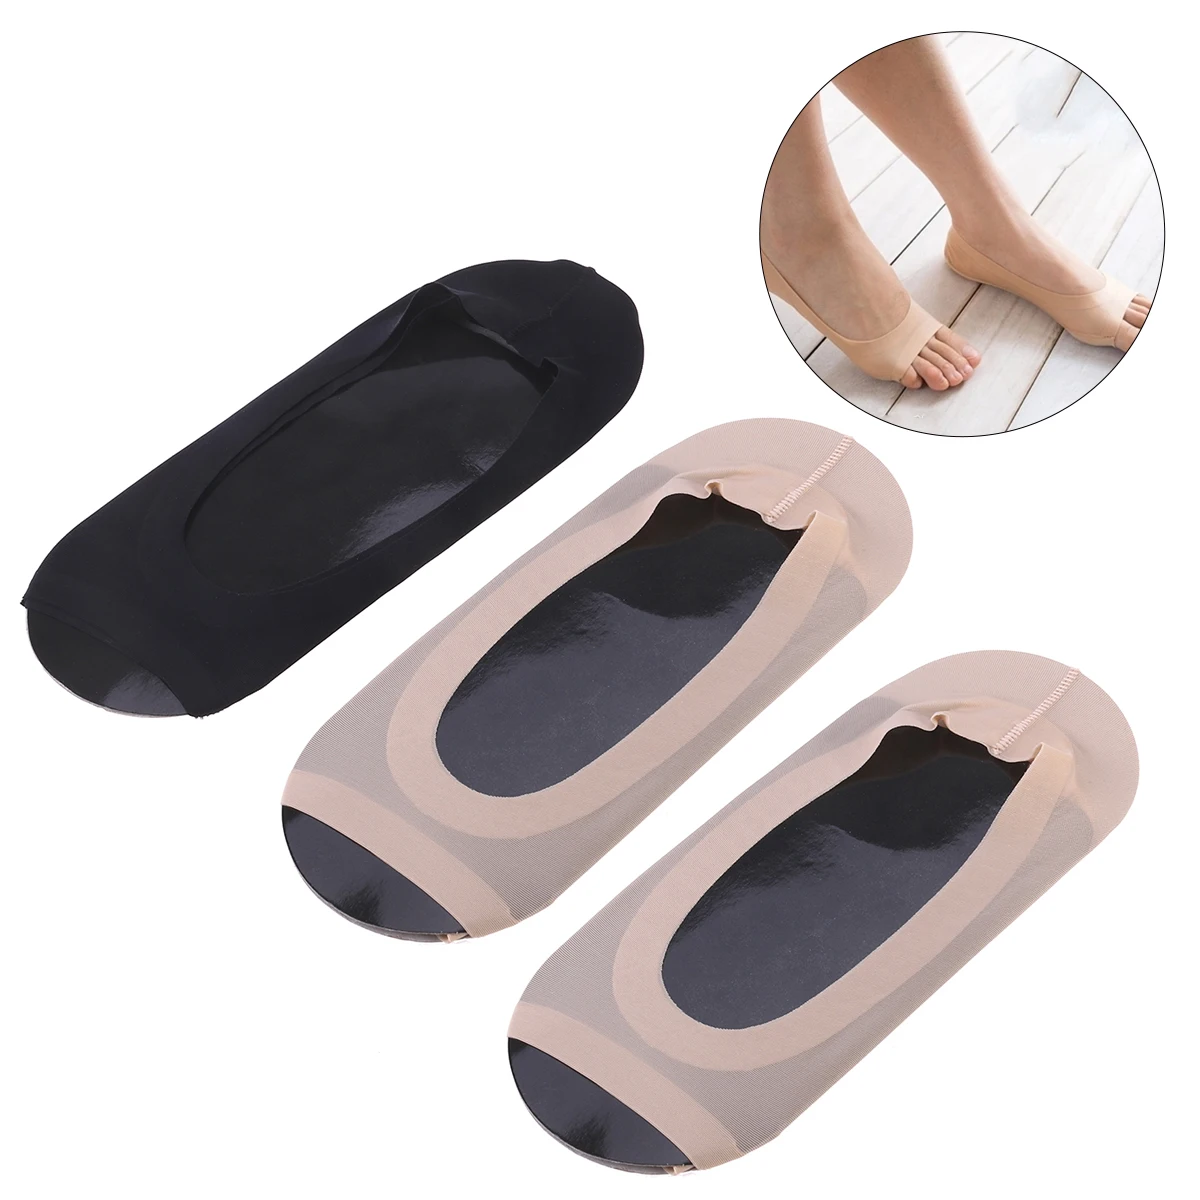 

3 Pairs Invisible Peep Toe Socks Non-slip Heel Grip Low Cut Ankle Liner Toeless Socks (Black & Beige)